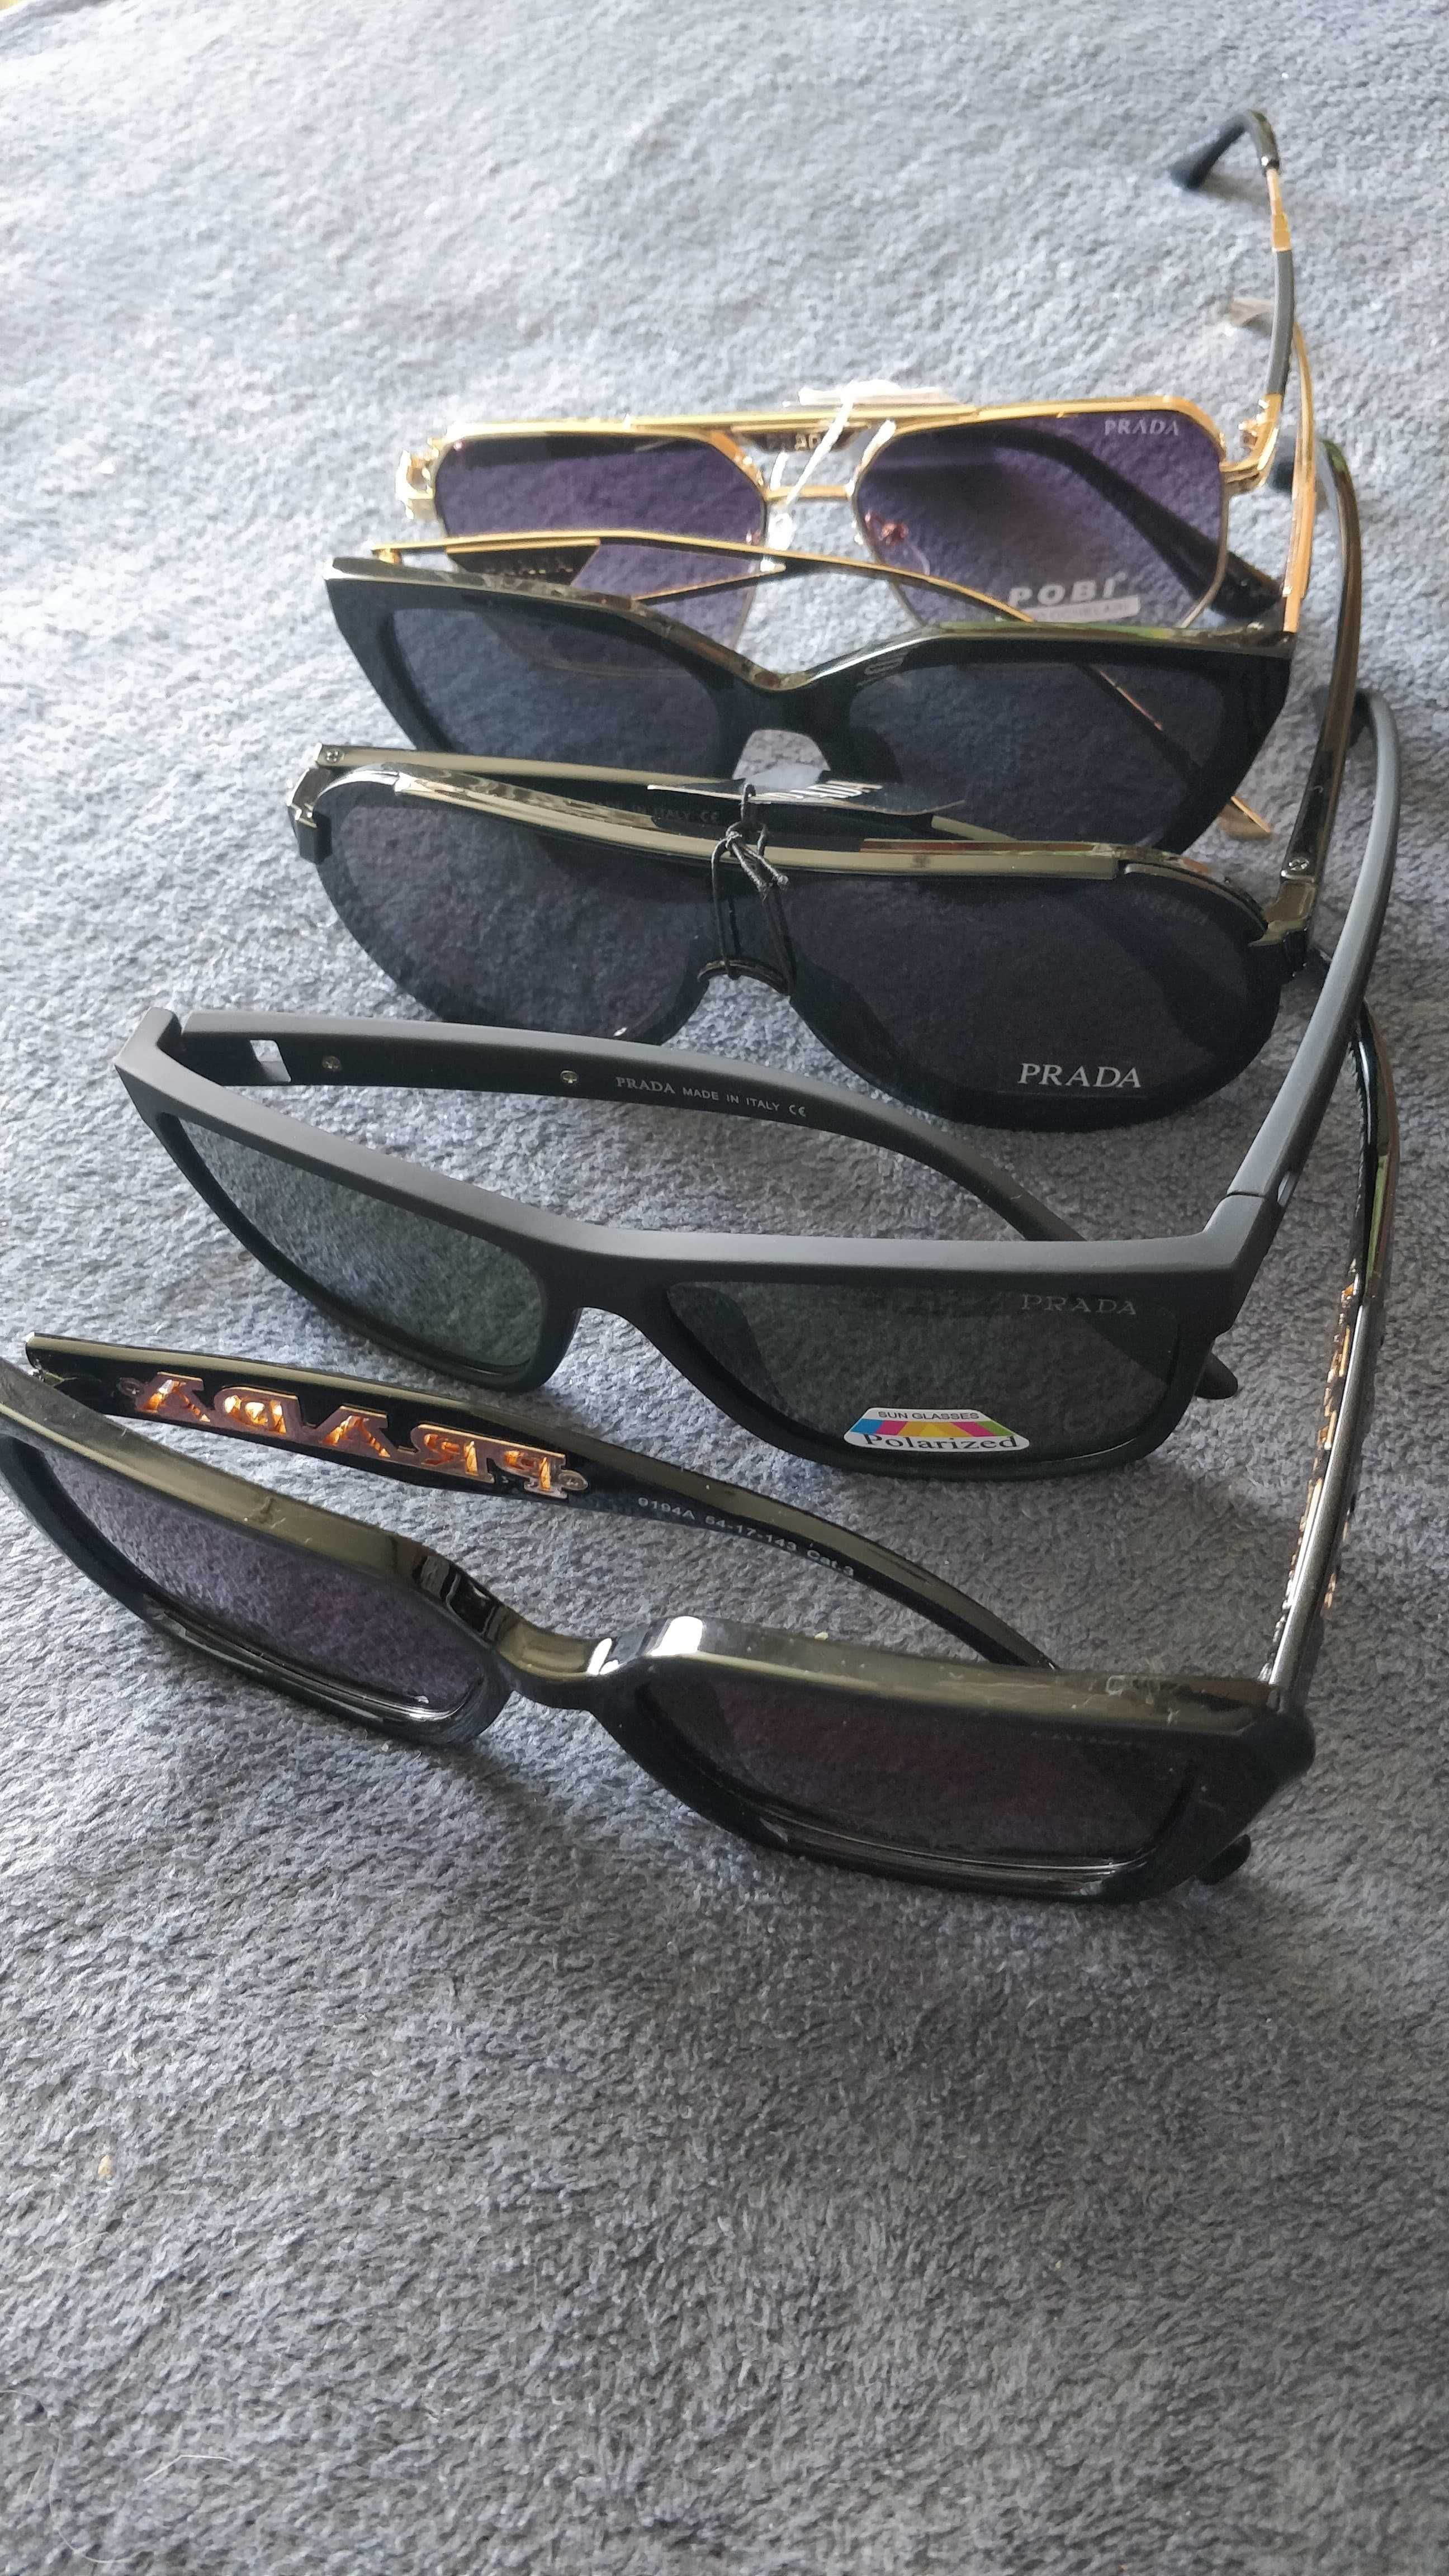 Ochelari de soare Prada, diverse modele. Saculet si laveta incluse